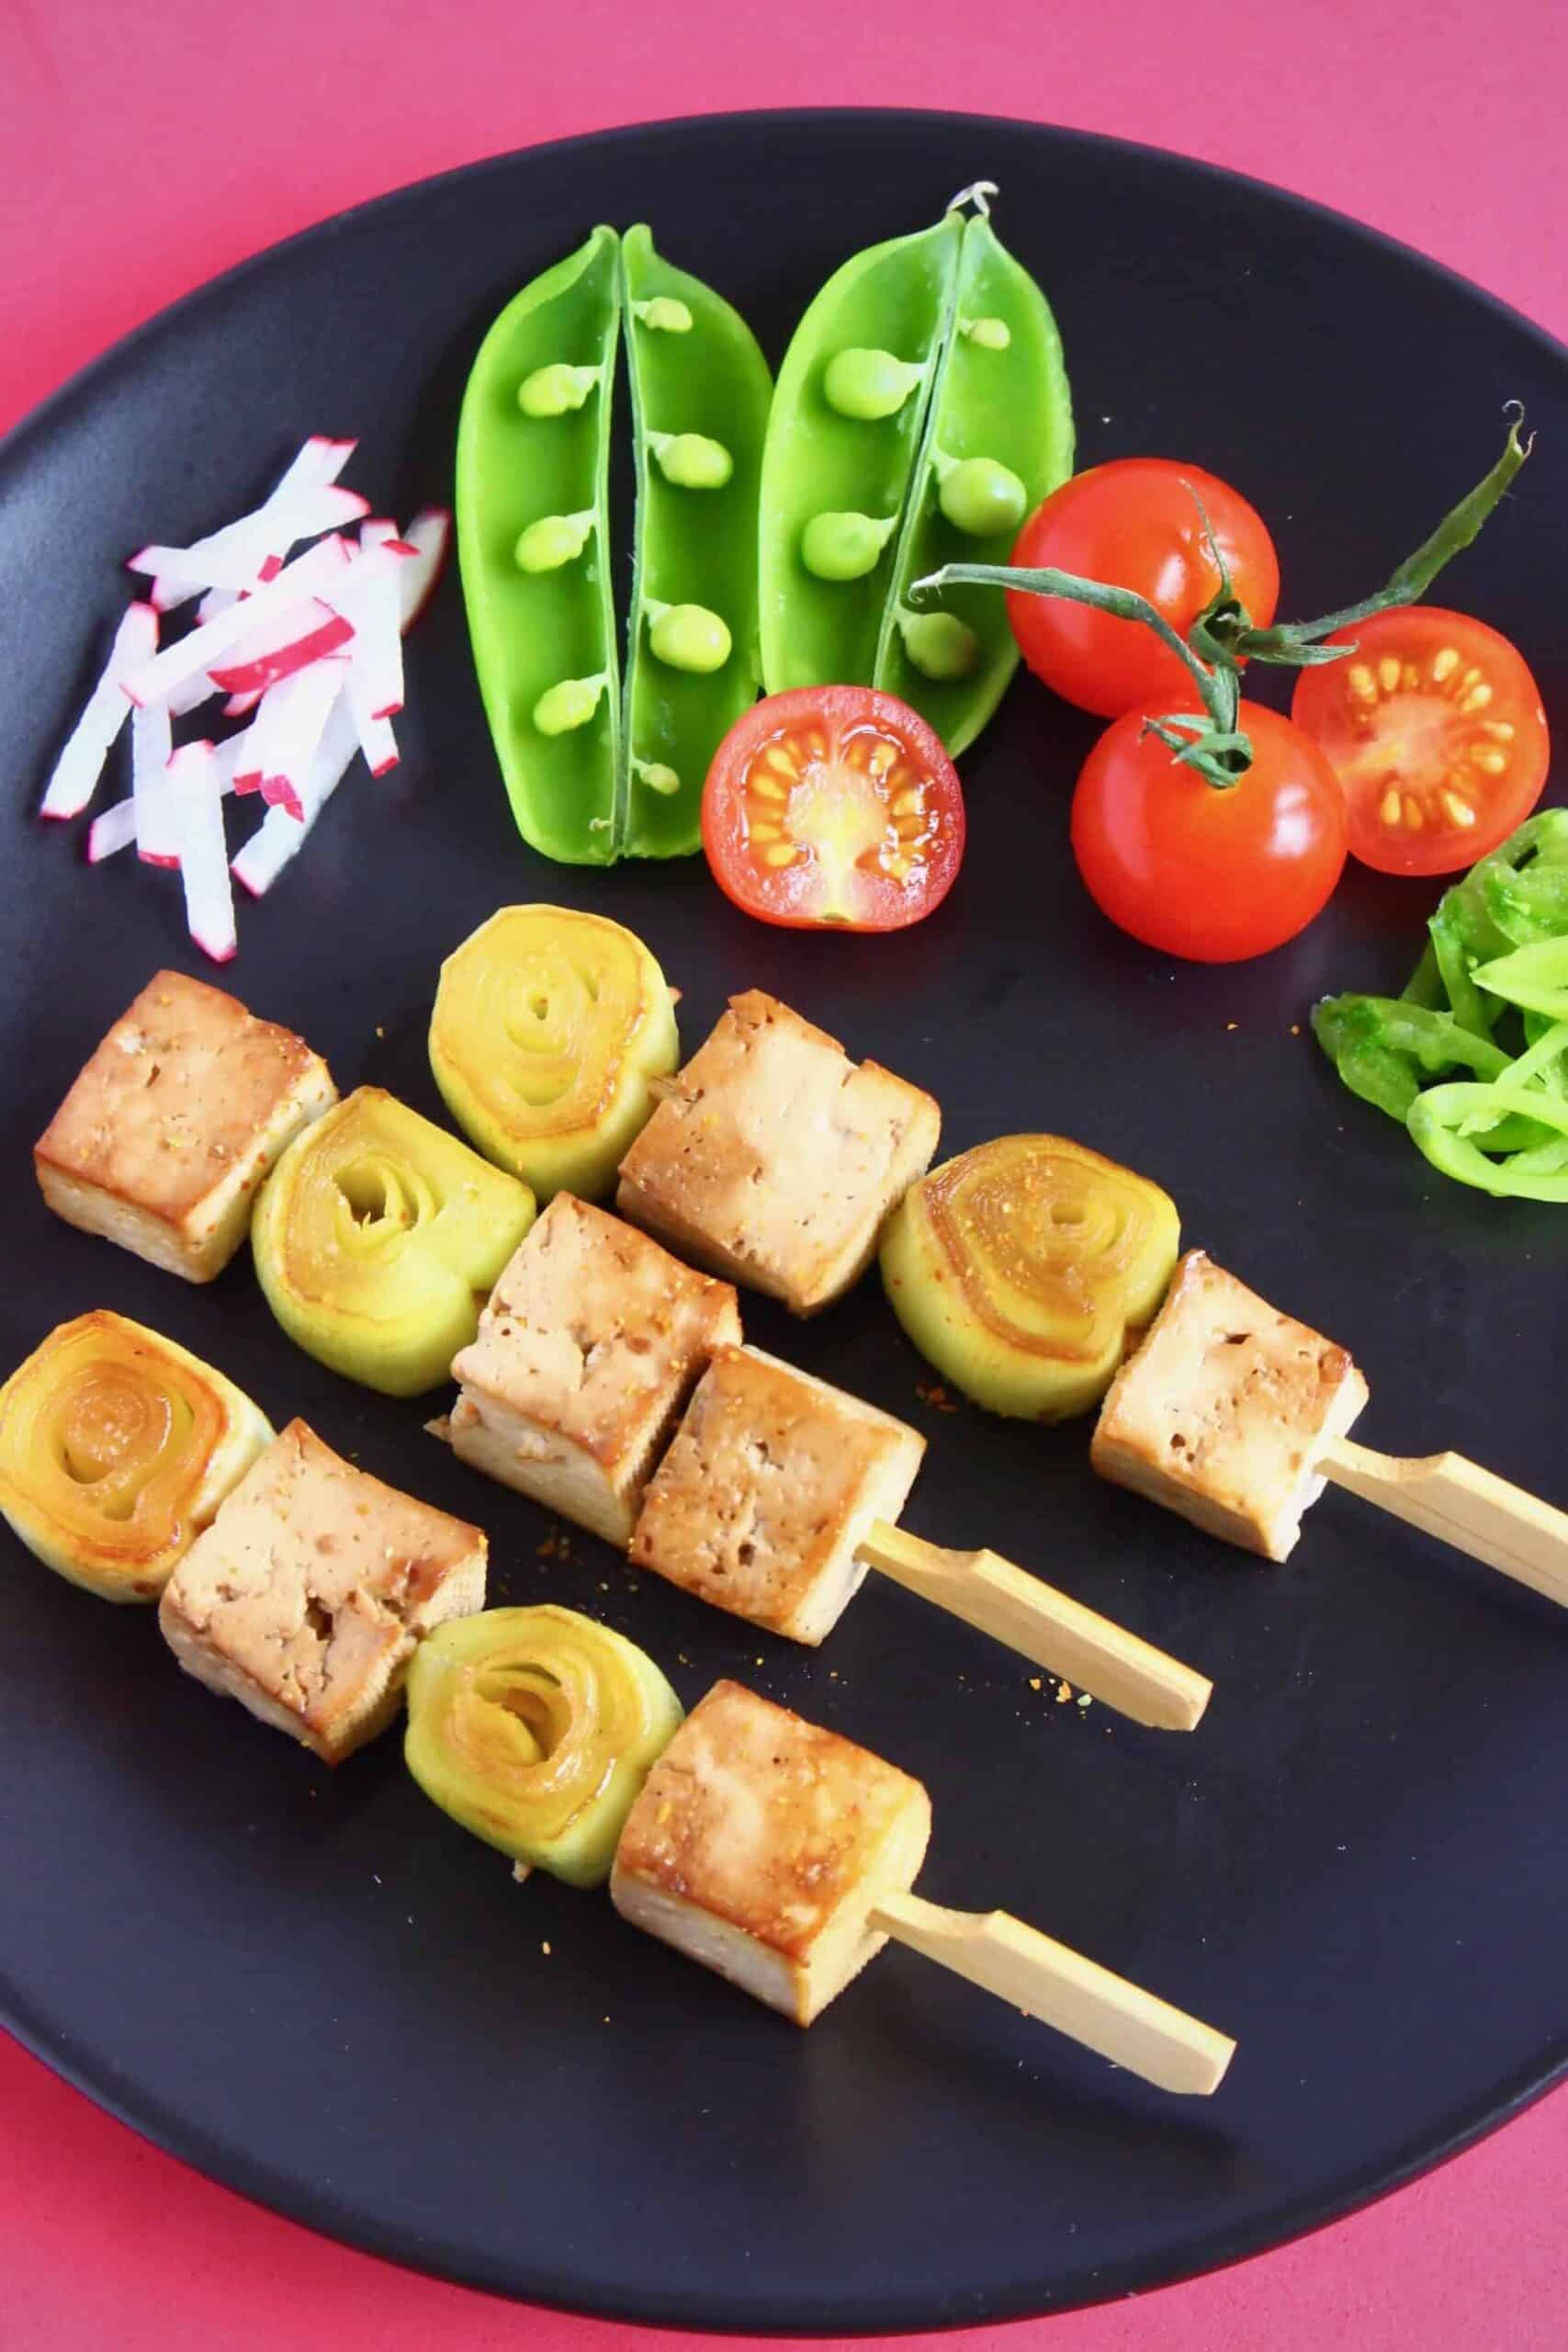 Tofu cubes and sliced leeks on three wooden skewers on a black plate